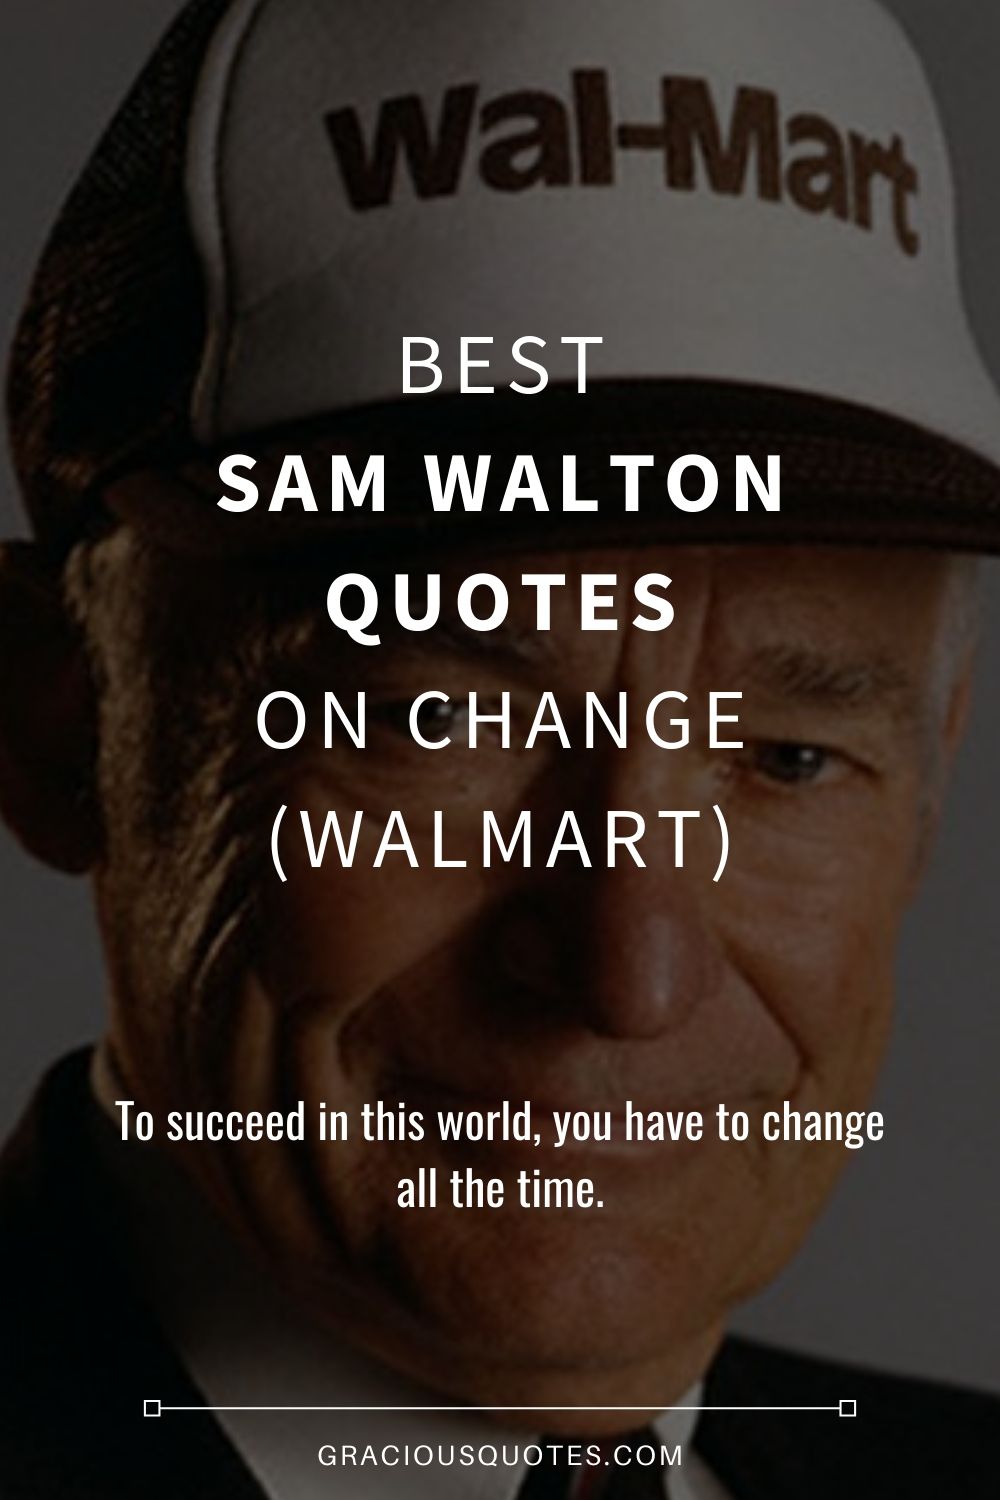 Best Sam Walton Quotes on Change (WALMART) - Gracious Quotes